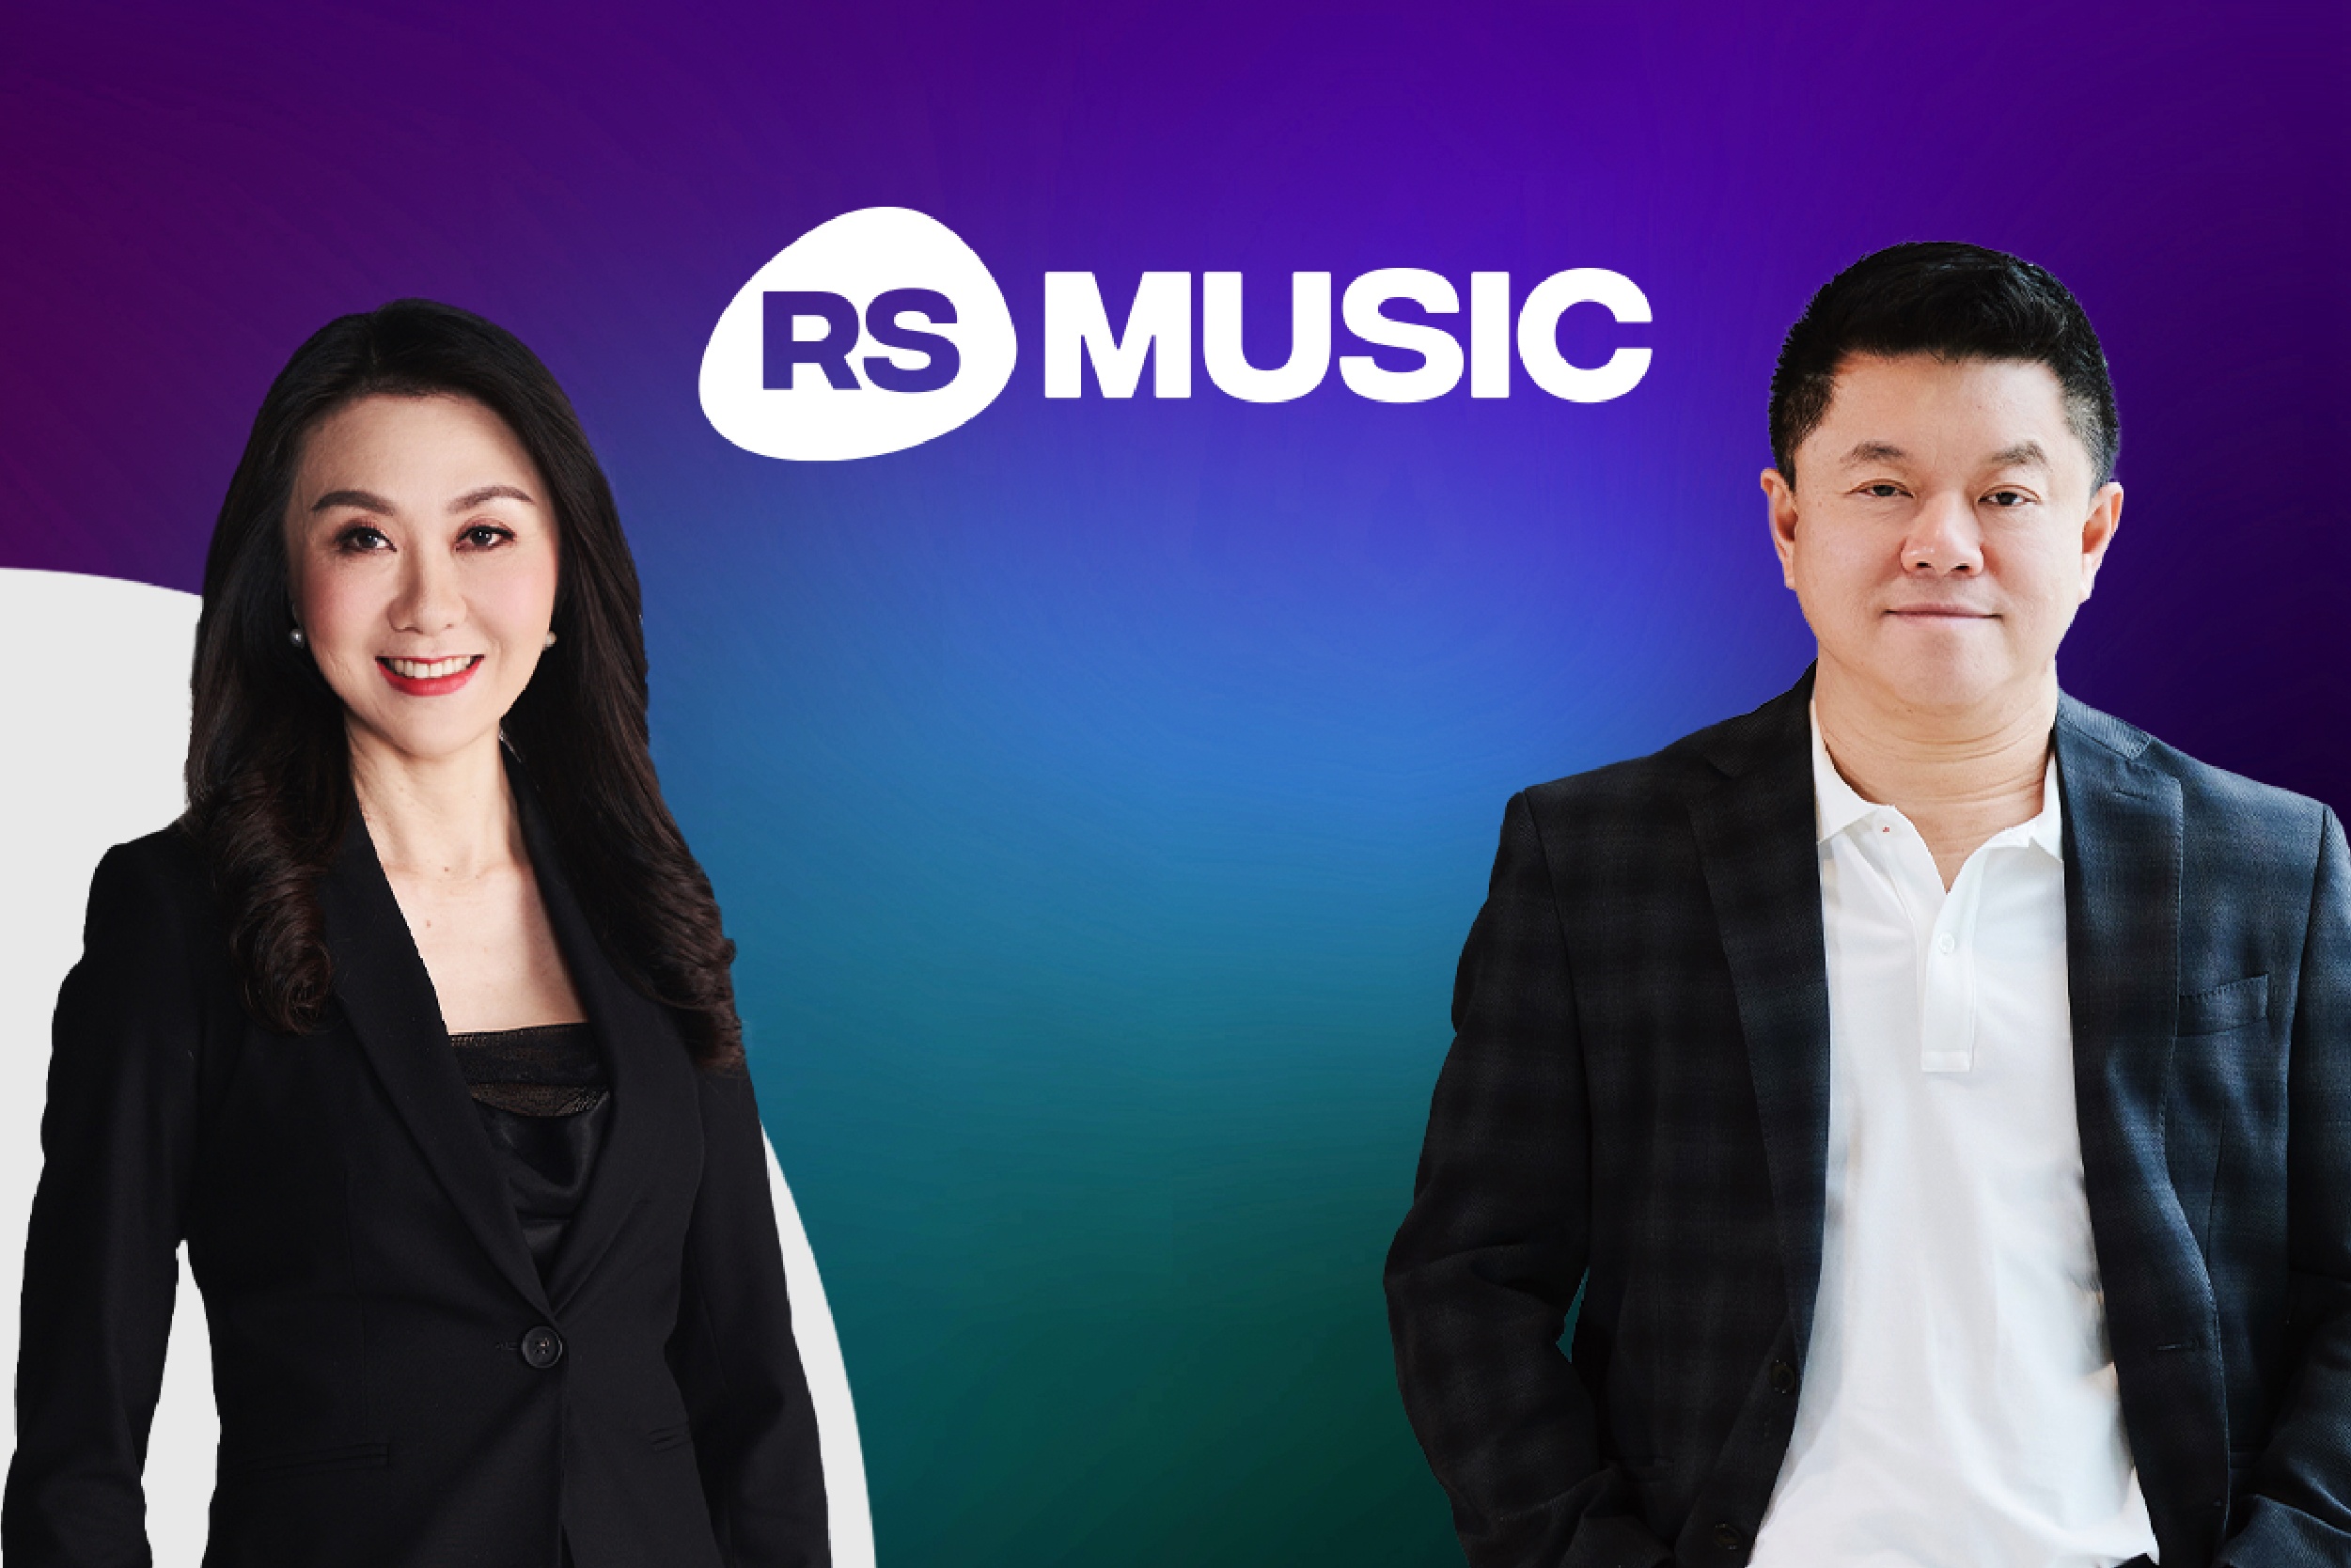 RS Music จับมือพาร์ทเนอร์ระดับโลกลุยปั้นรายได้ 1.2 พันลบ.ใน 3 ปี